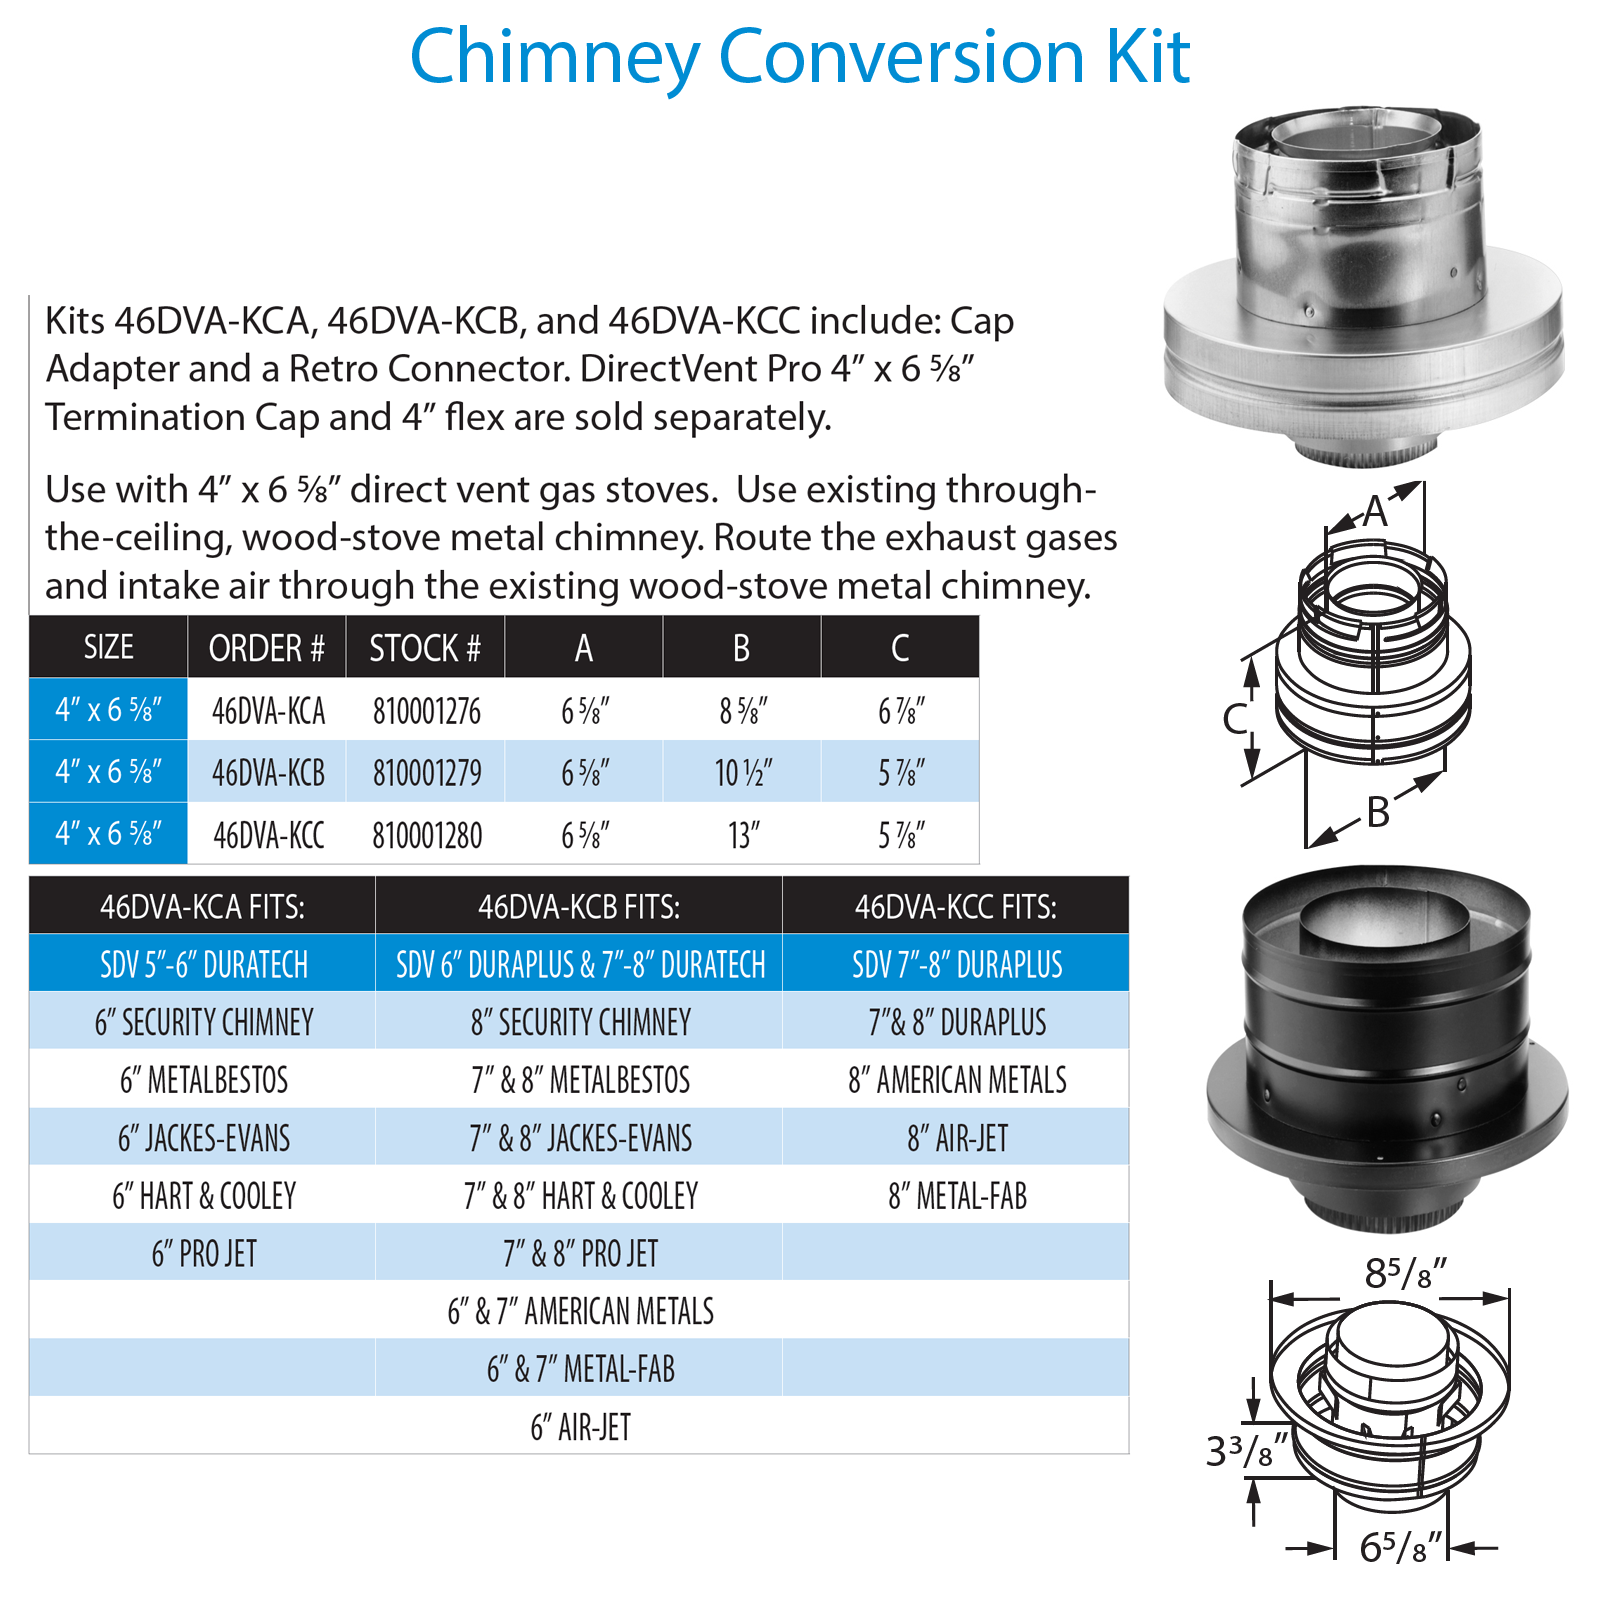 DuraVent DirectVent Pro Chimney Conversion Kit | 46DVA-KCB